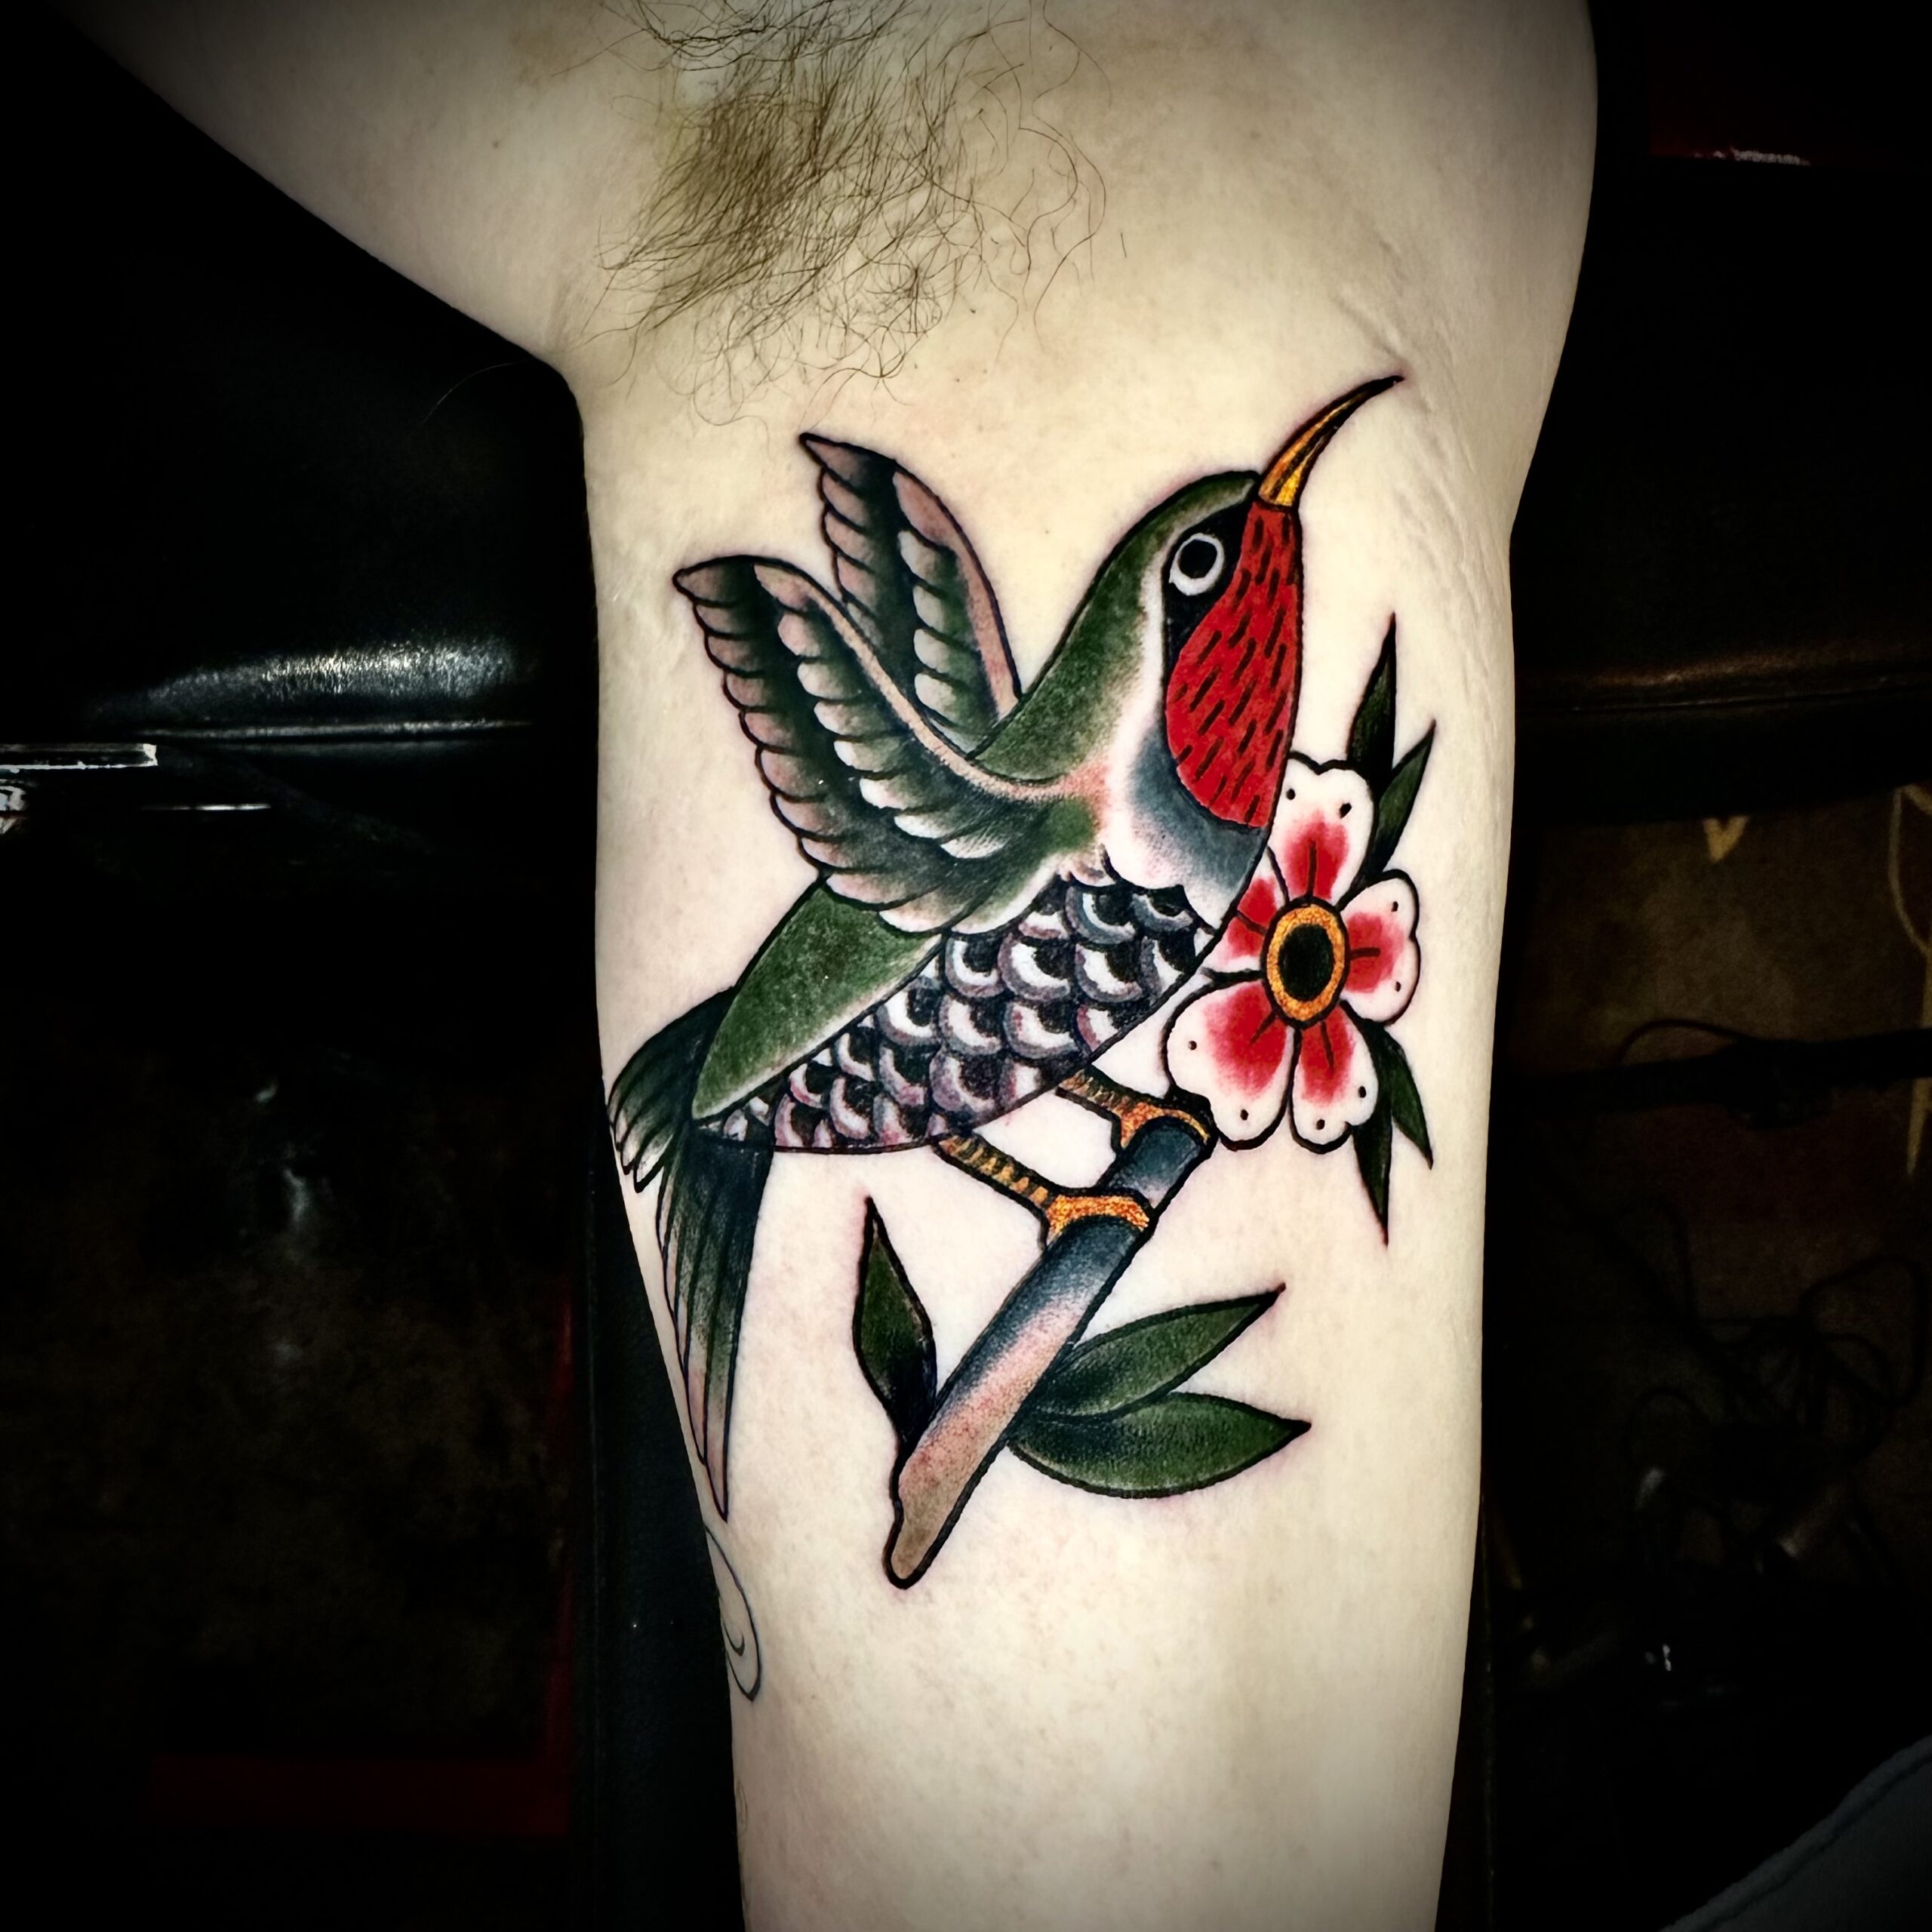 Tattoo of a bird and a flower